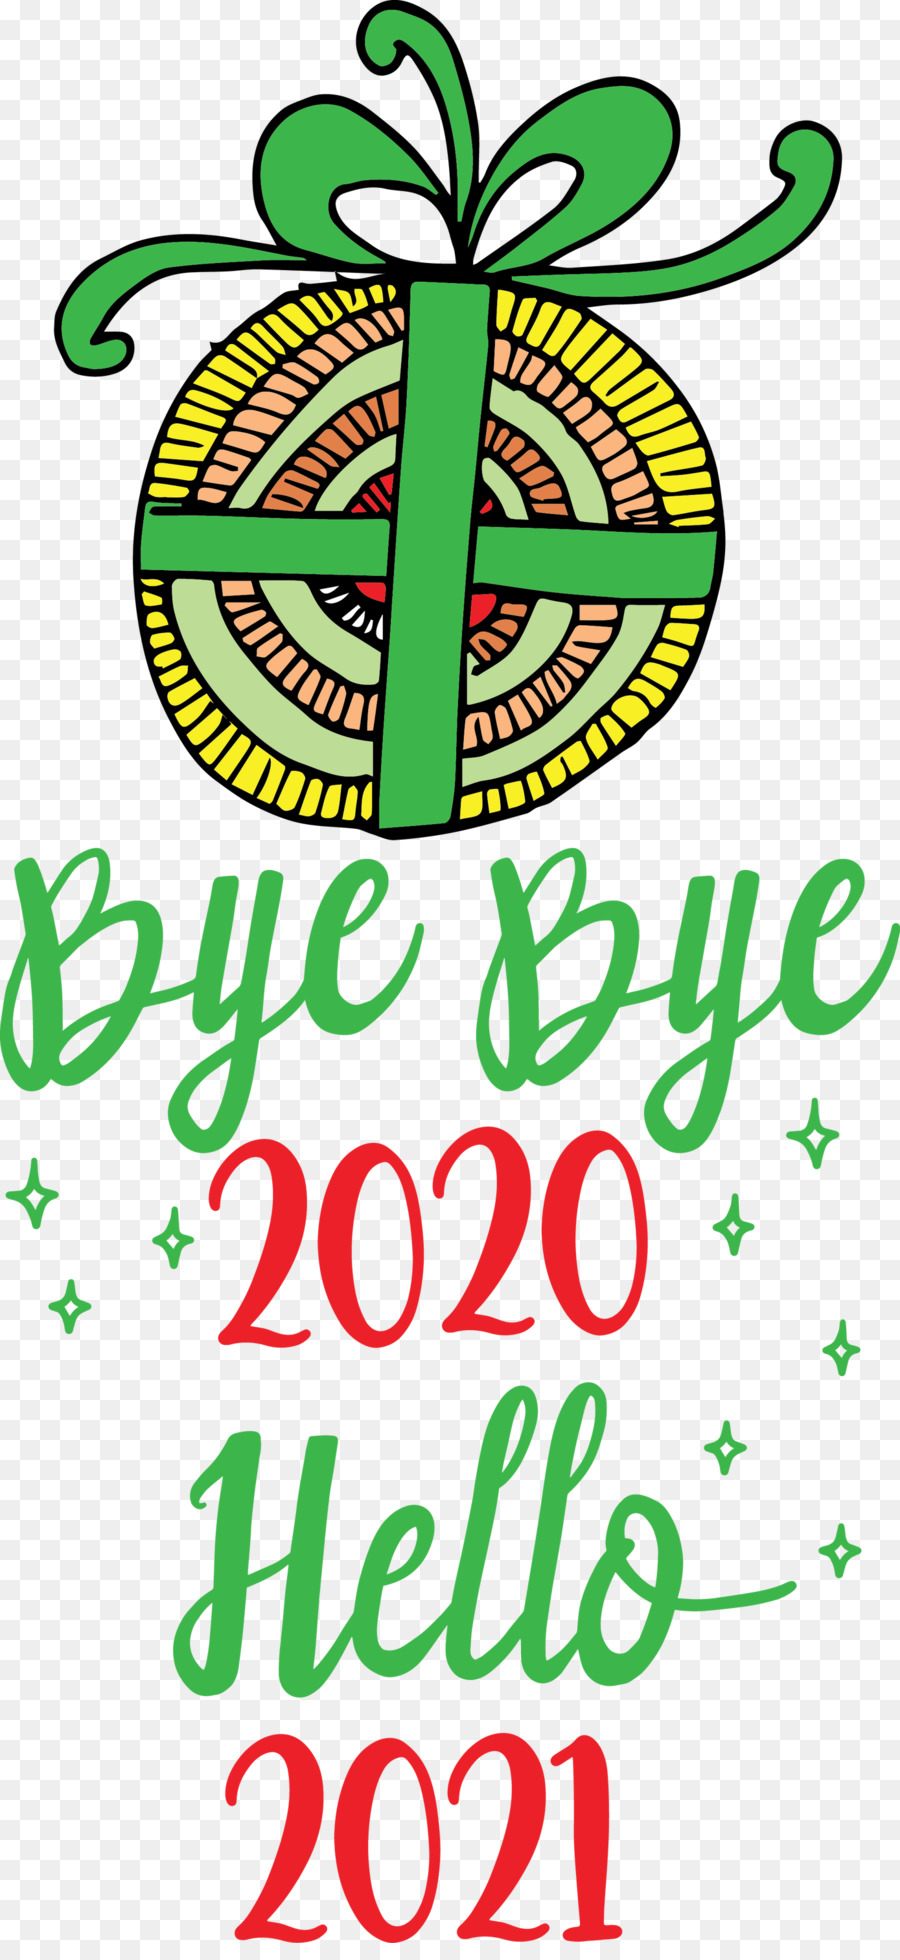 Hello 2021 Year Bye bye 2020 Year - 